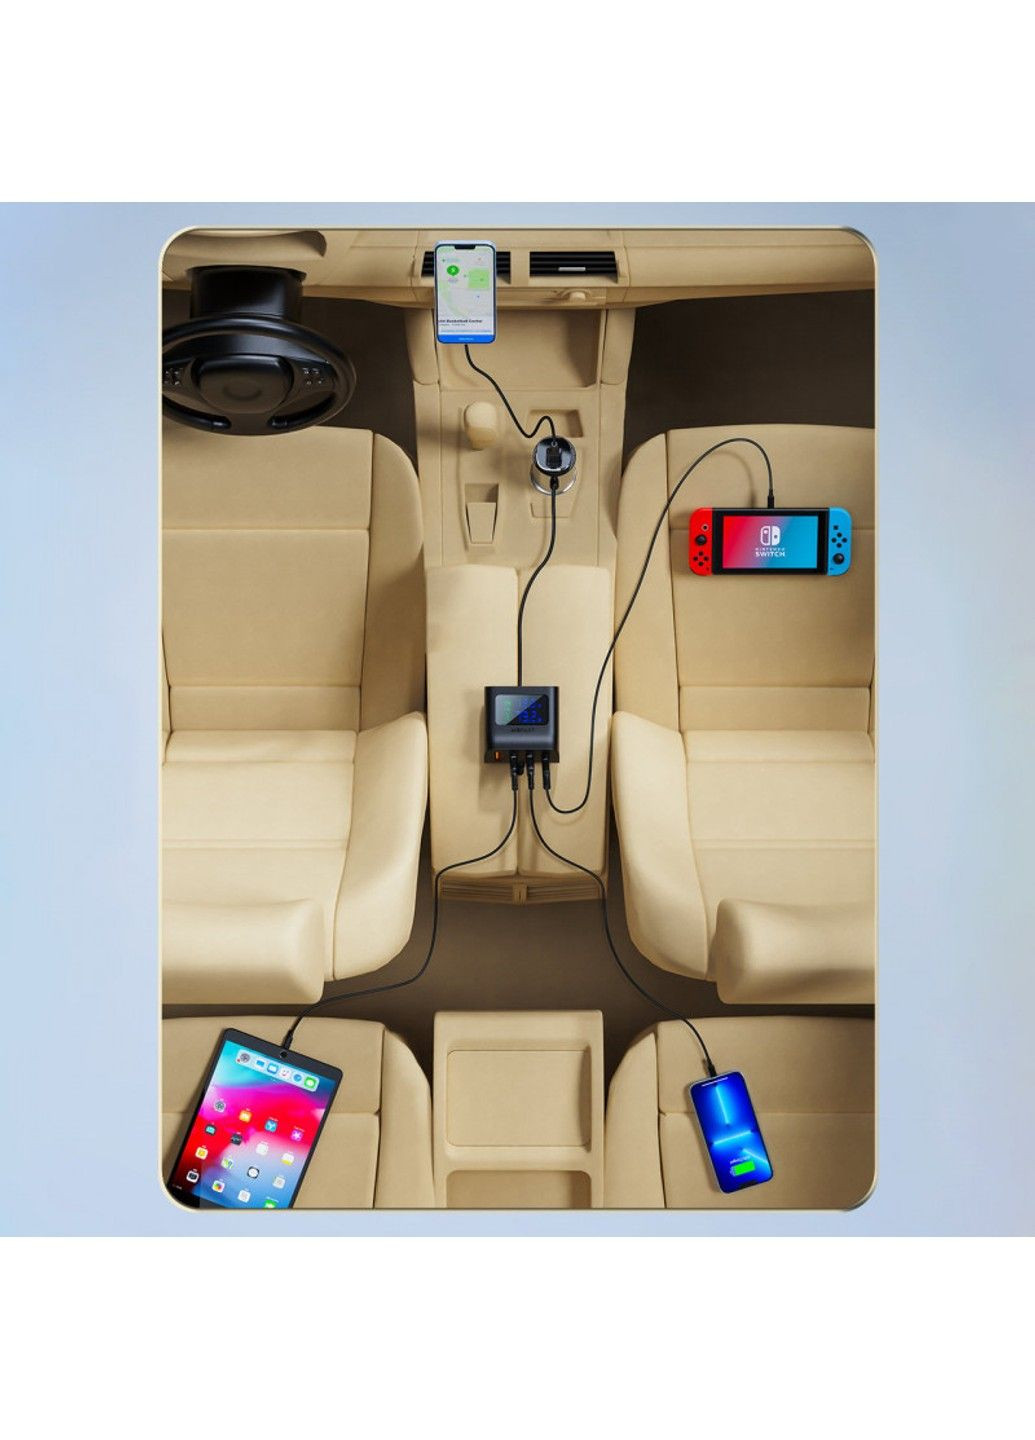 АЗП B8 digital display car HUB charger Acefast (291880615)